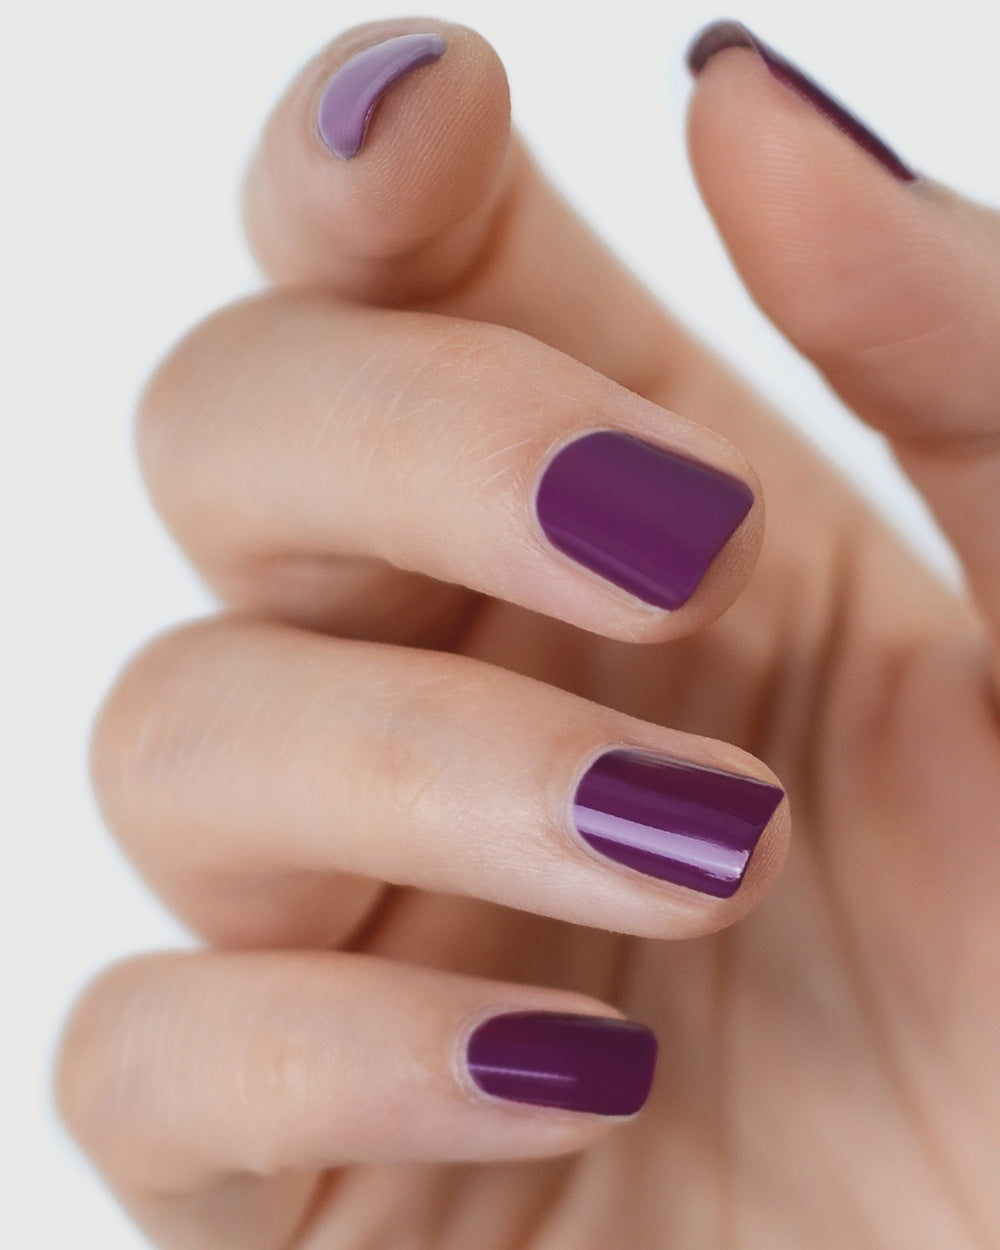 Reverence Violet Grape Crème nail polish by Sienna Byron Bay on fair skin tone hand.